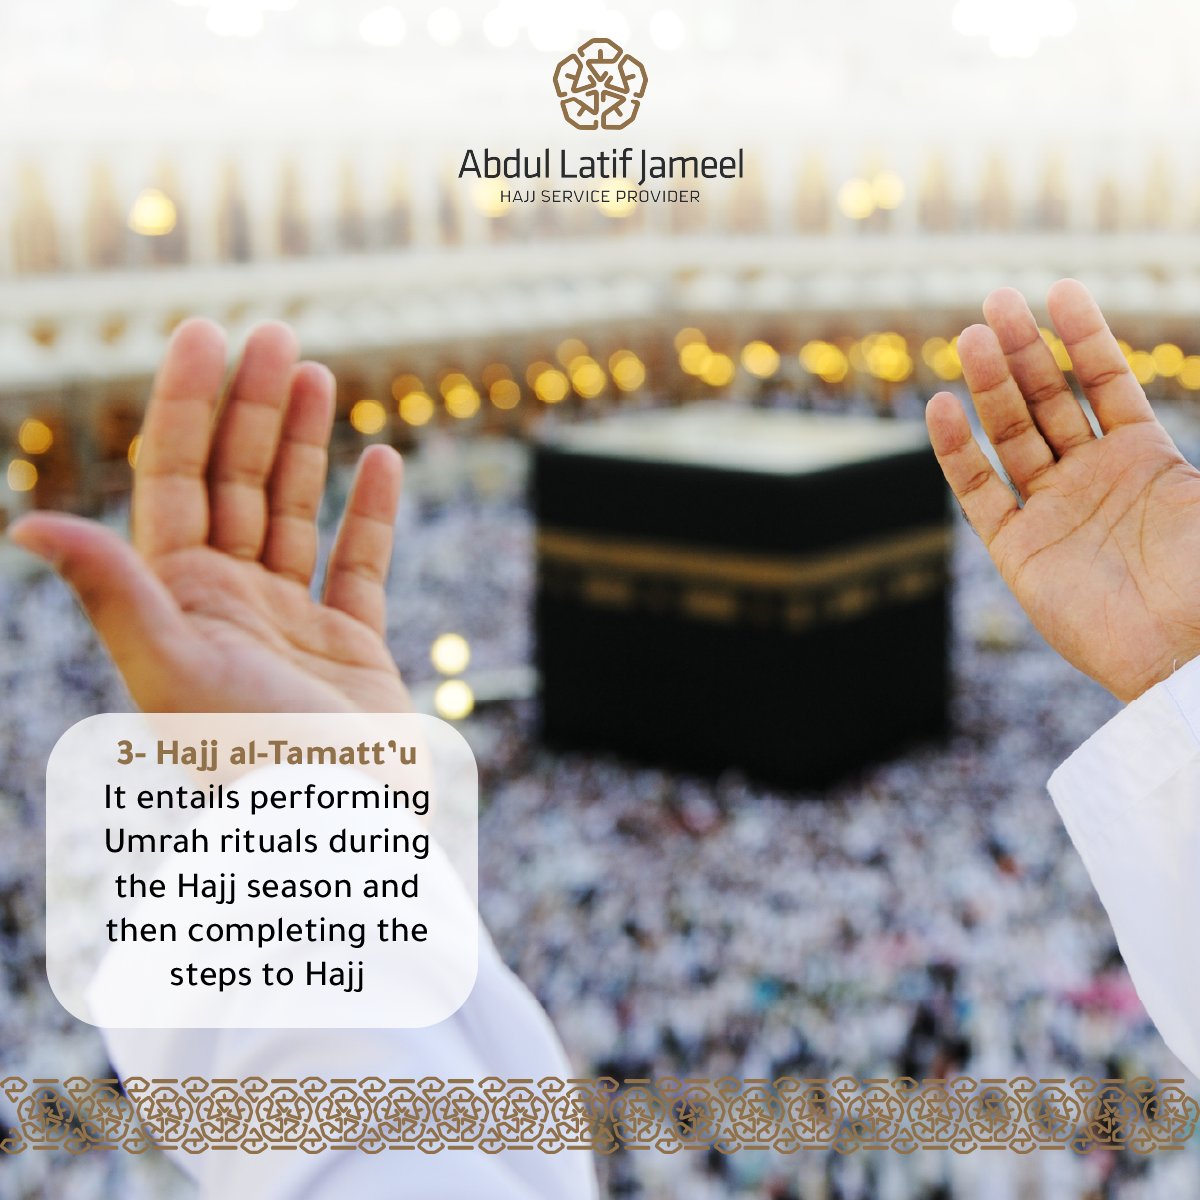 There are 3 types of Hajj, each has a unique journey of devotion. From Ifrad to Tamattu,learn what sets each apart and how they fulfill the pilgrimage's spiritual essence.
#abdullatifjameelHajj #Hajj_Jameel #aljreicHajj #Hajj2024 #nusukHajj  #makkah #americanmuslims #Muslimworld